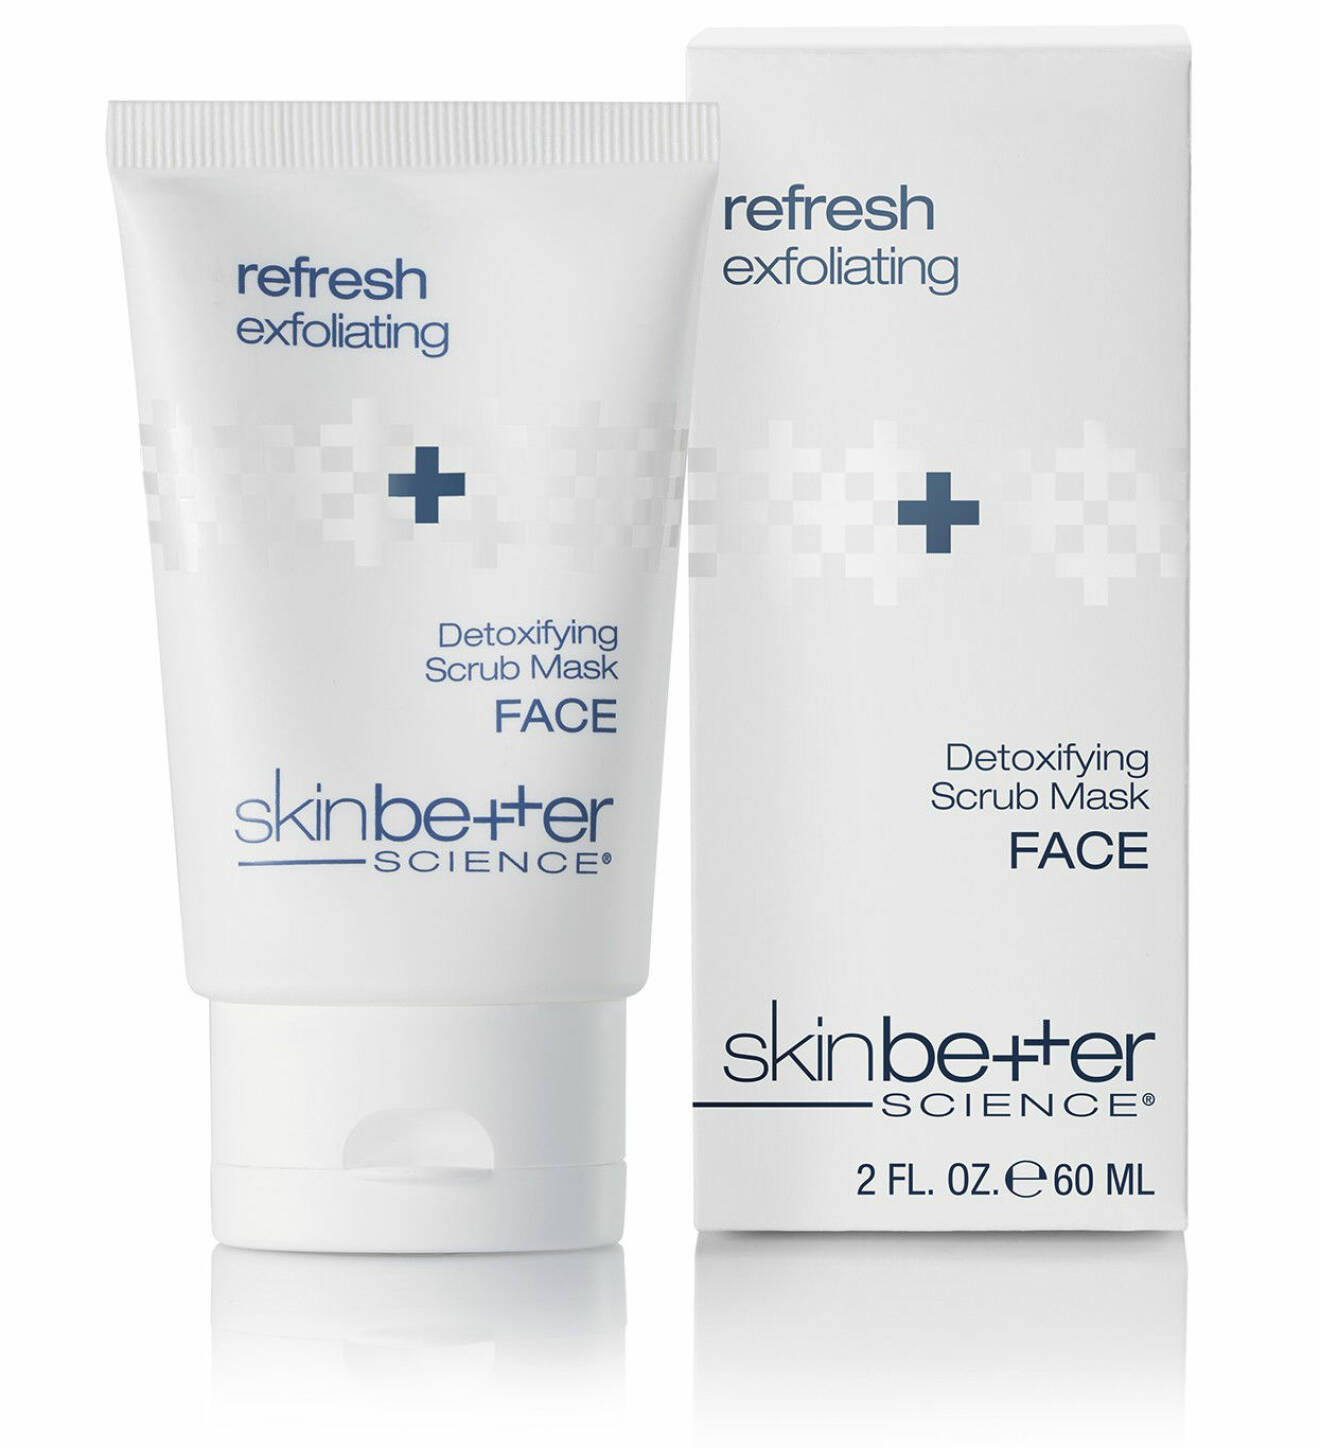 Refresh Exfoliating Detoxifying Scrub Mask Face från Skinbetter Science.